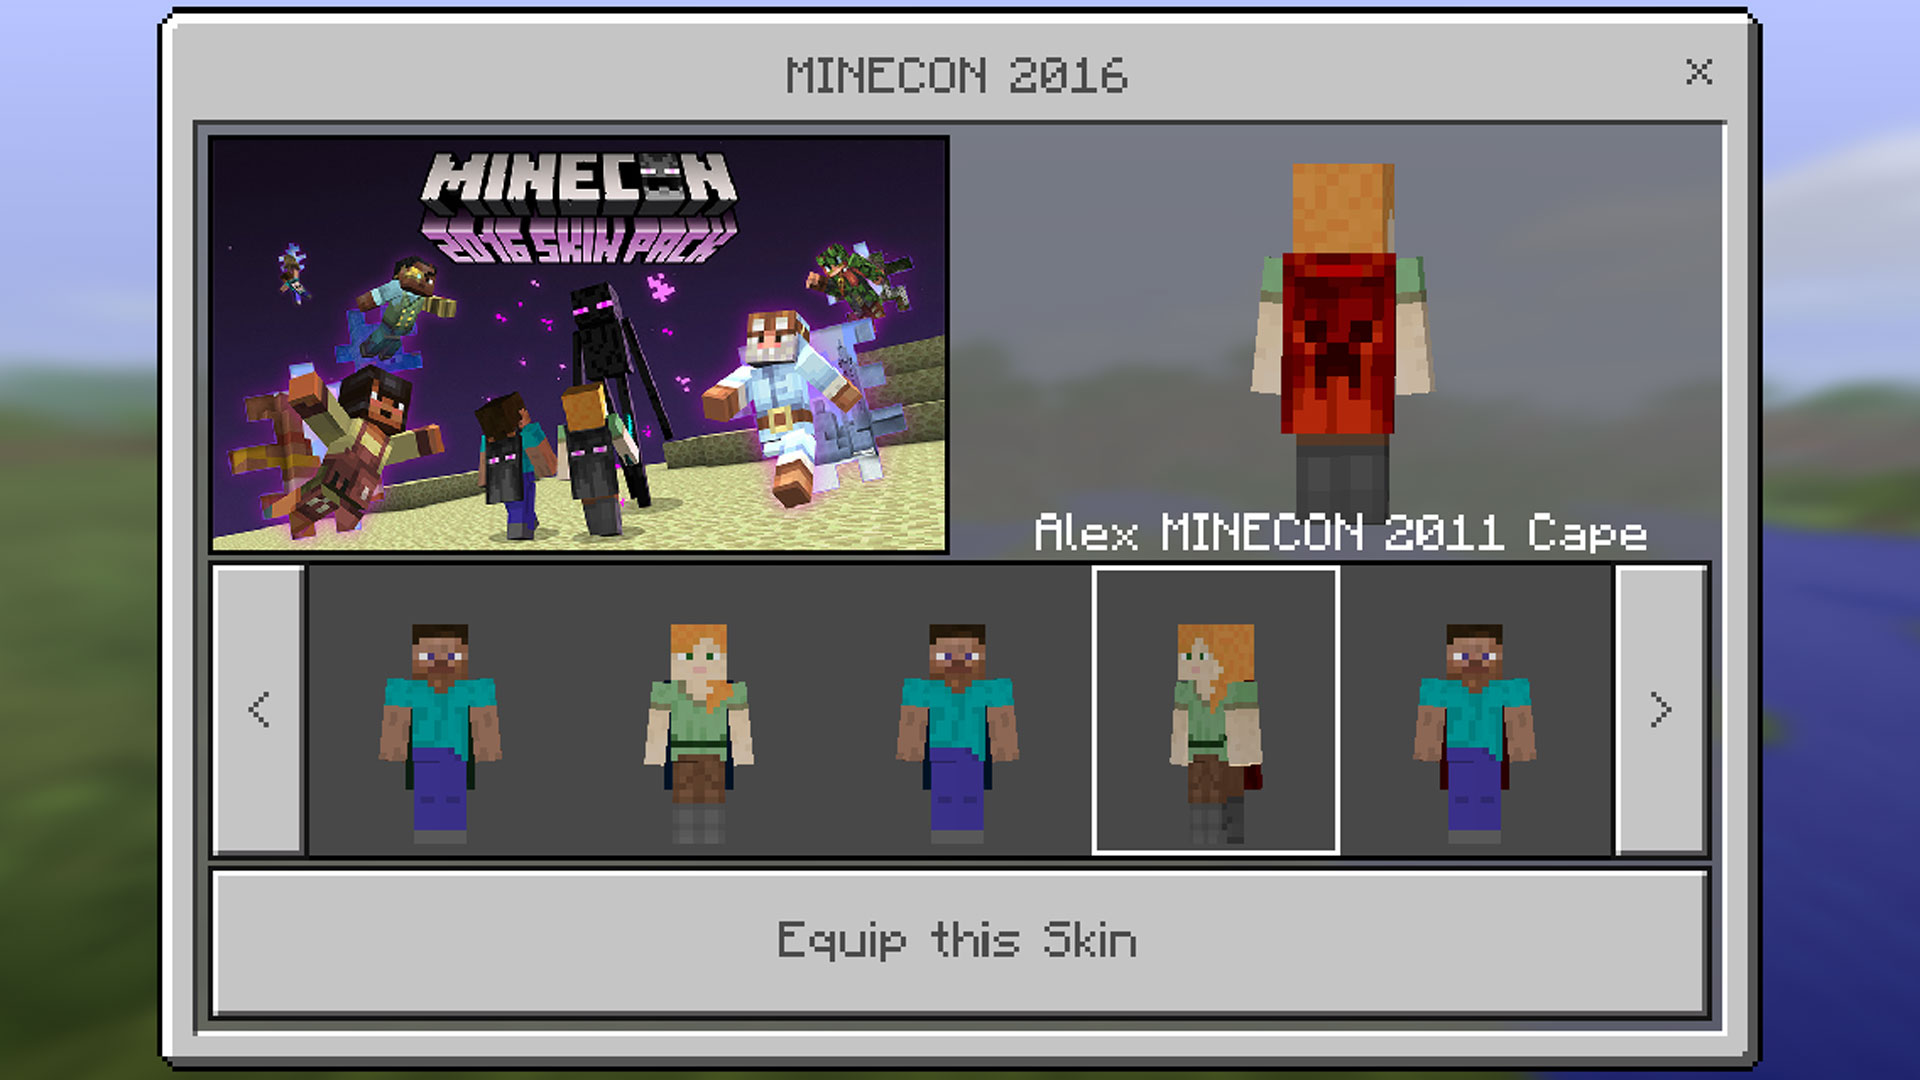 Minecraft Pocket Edition: Minecon 2016 Skin Pack